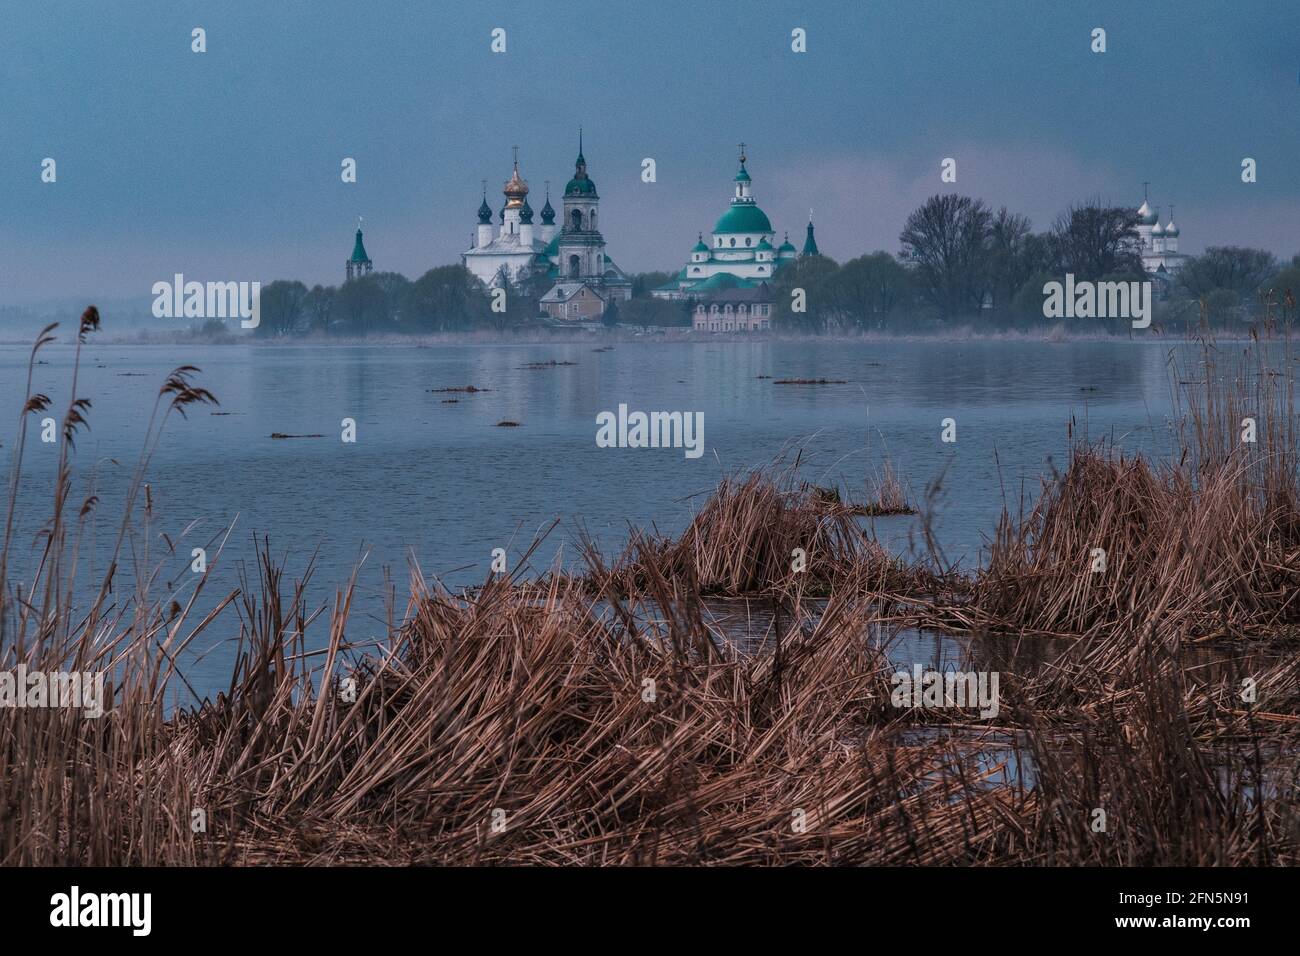 View of Spaso-Yakovlevsky Monastery in Rostov Veliky from Nero's lake on a sunset Stock Photo